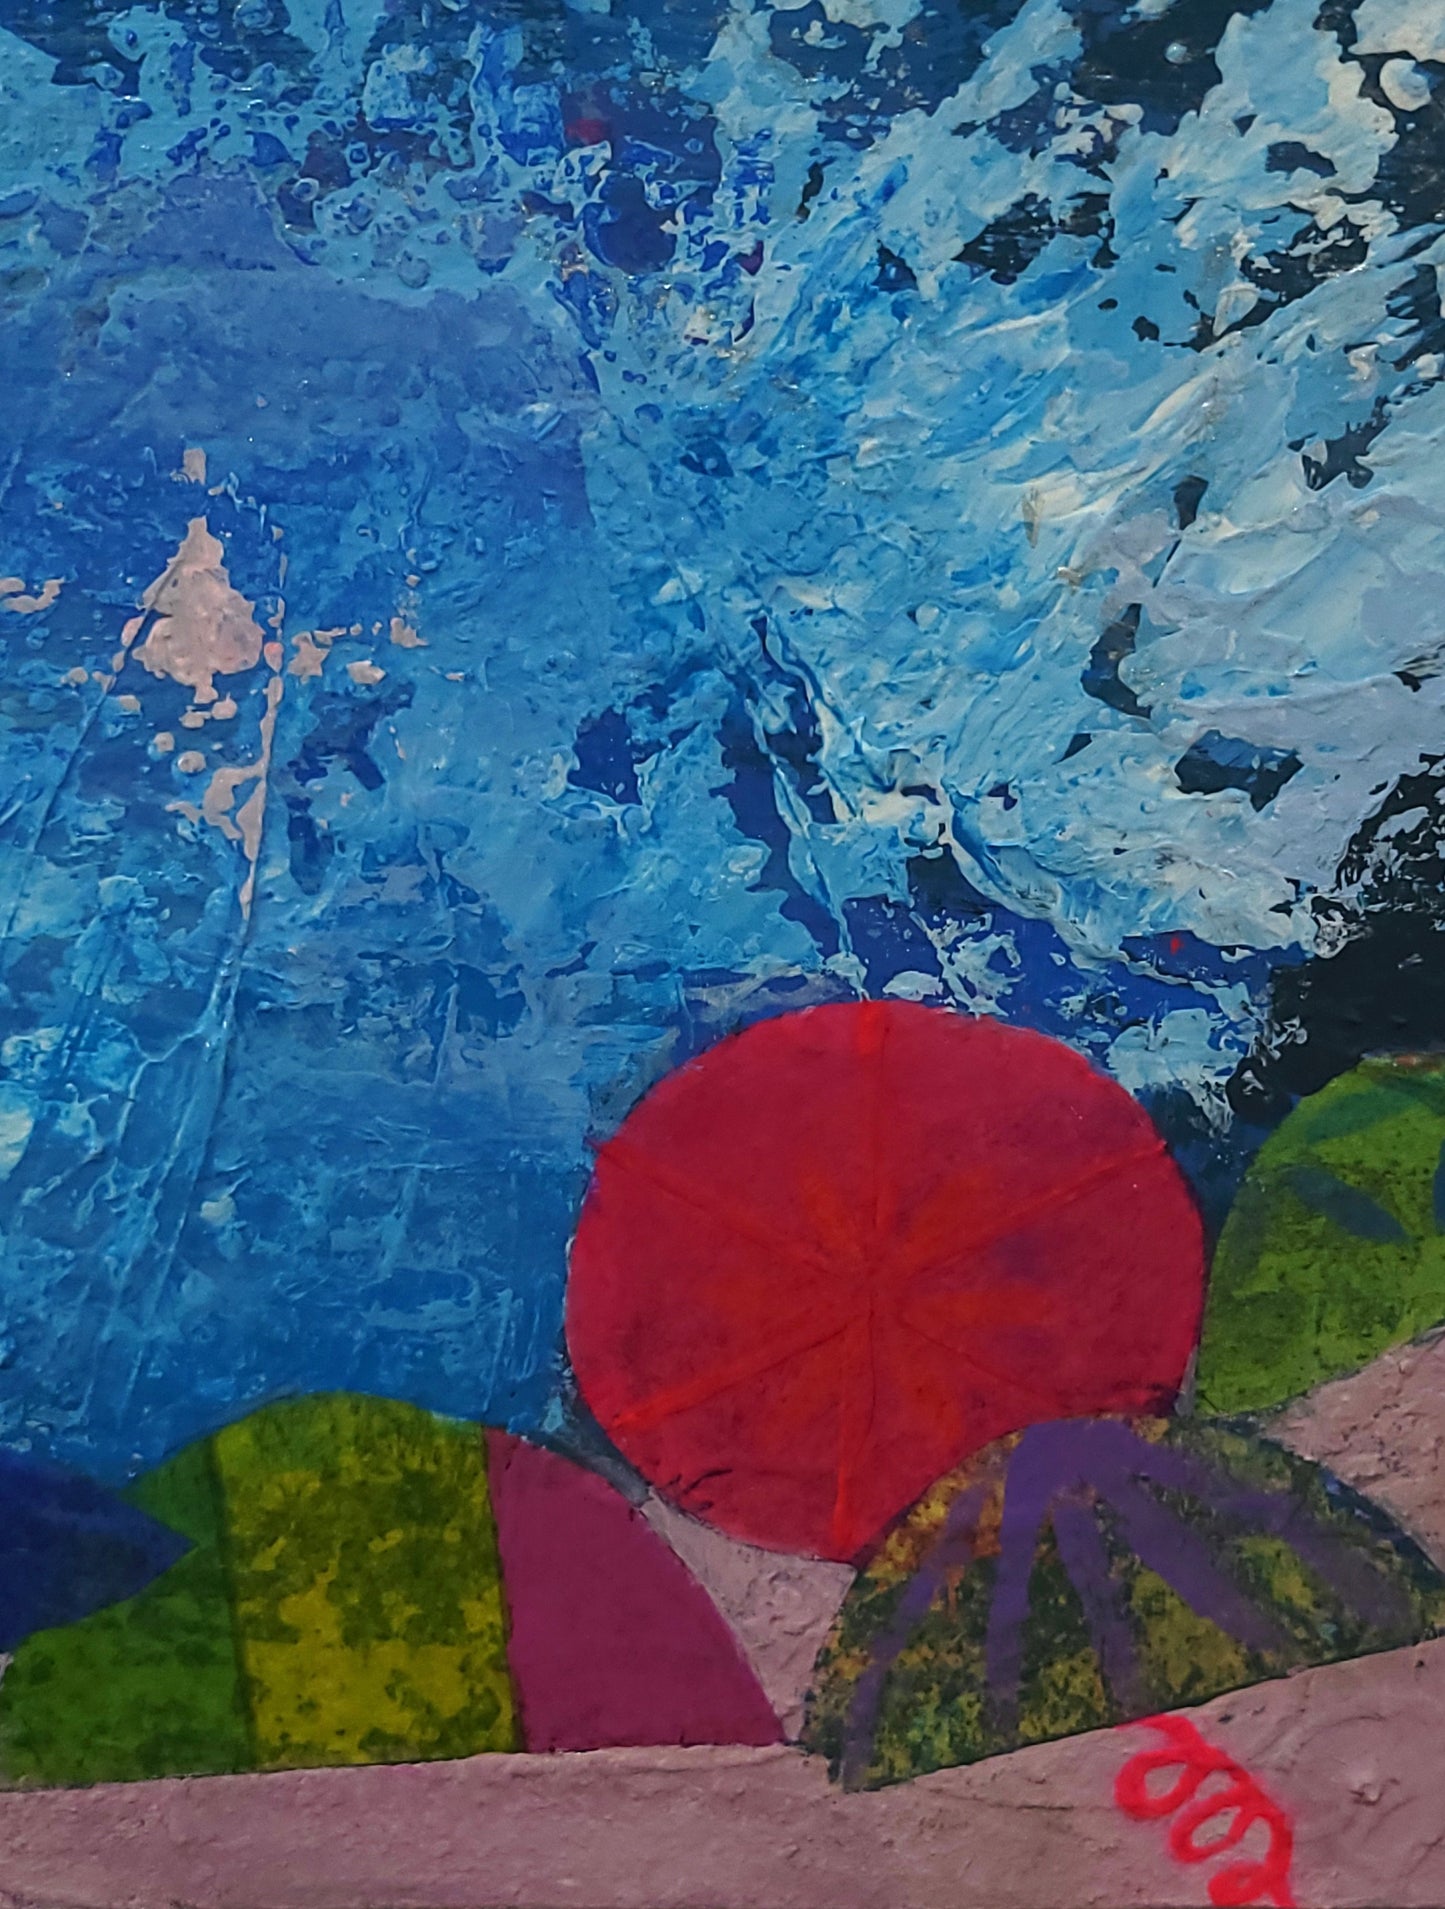 Detail 5 of La Plage showing umbrellas